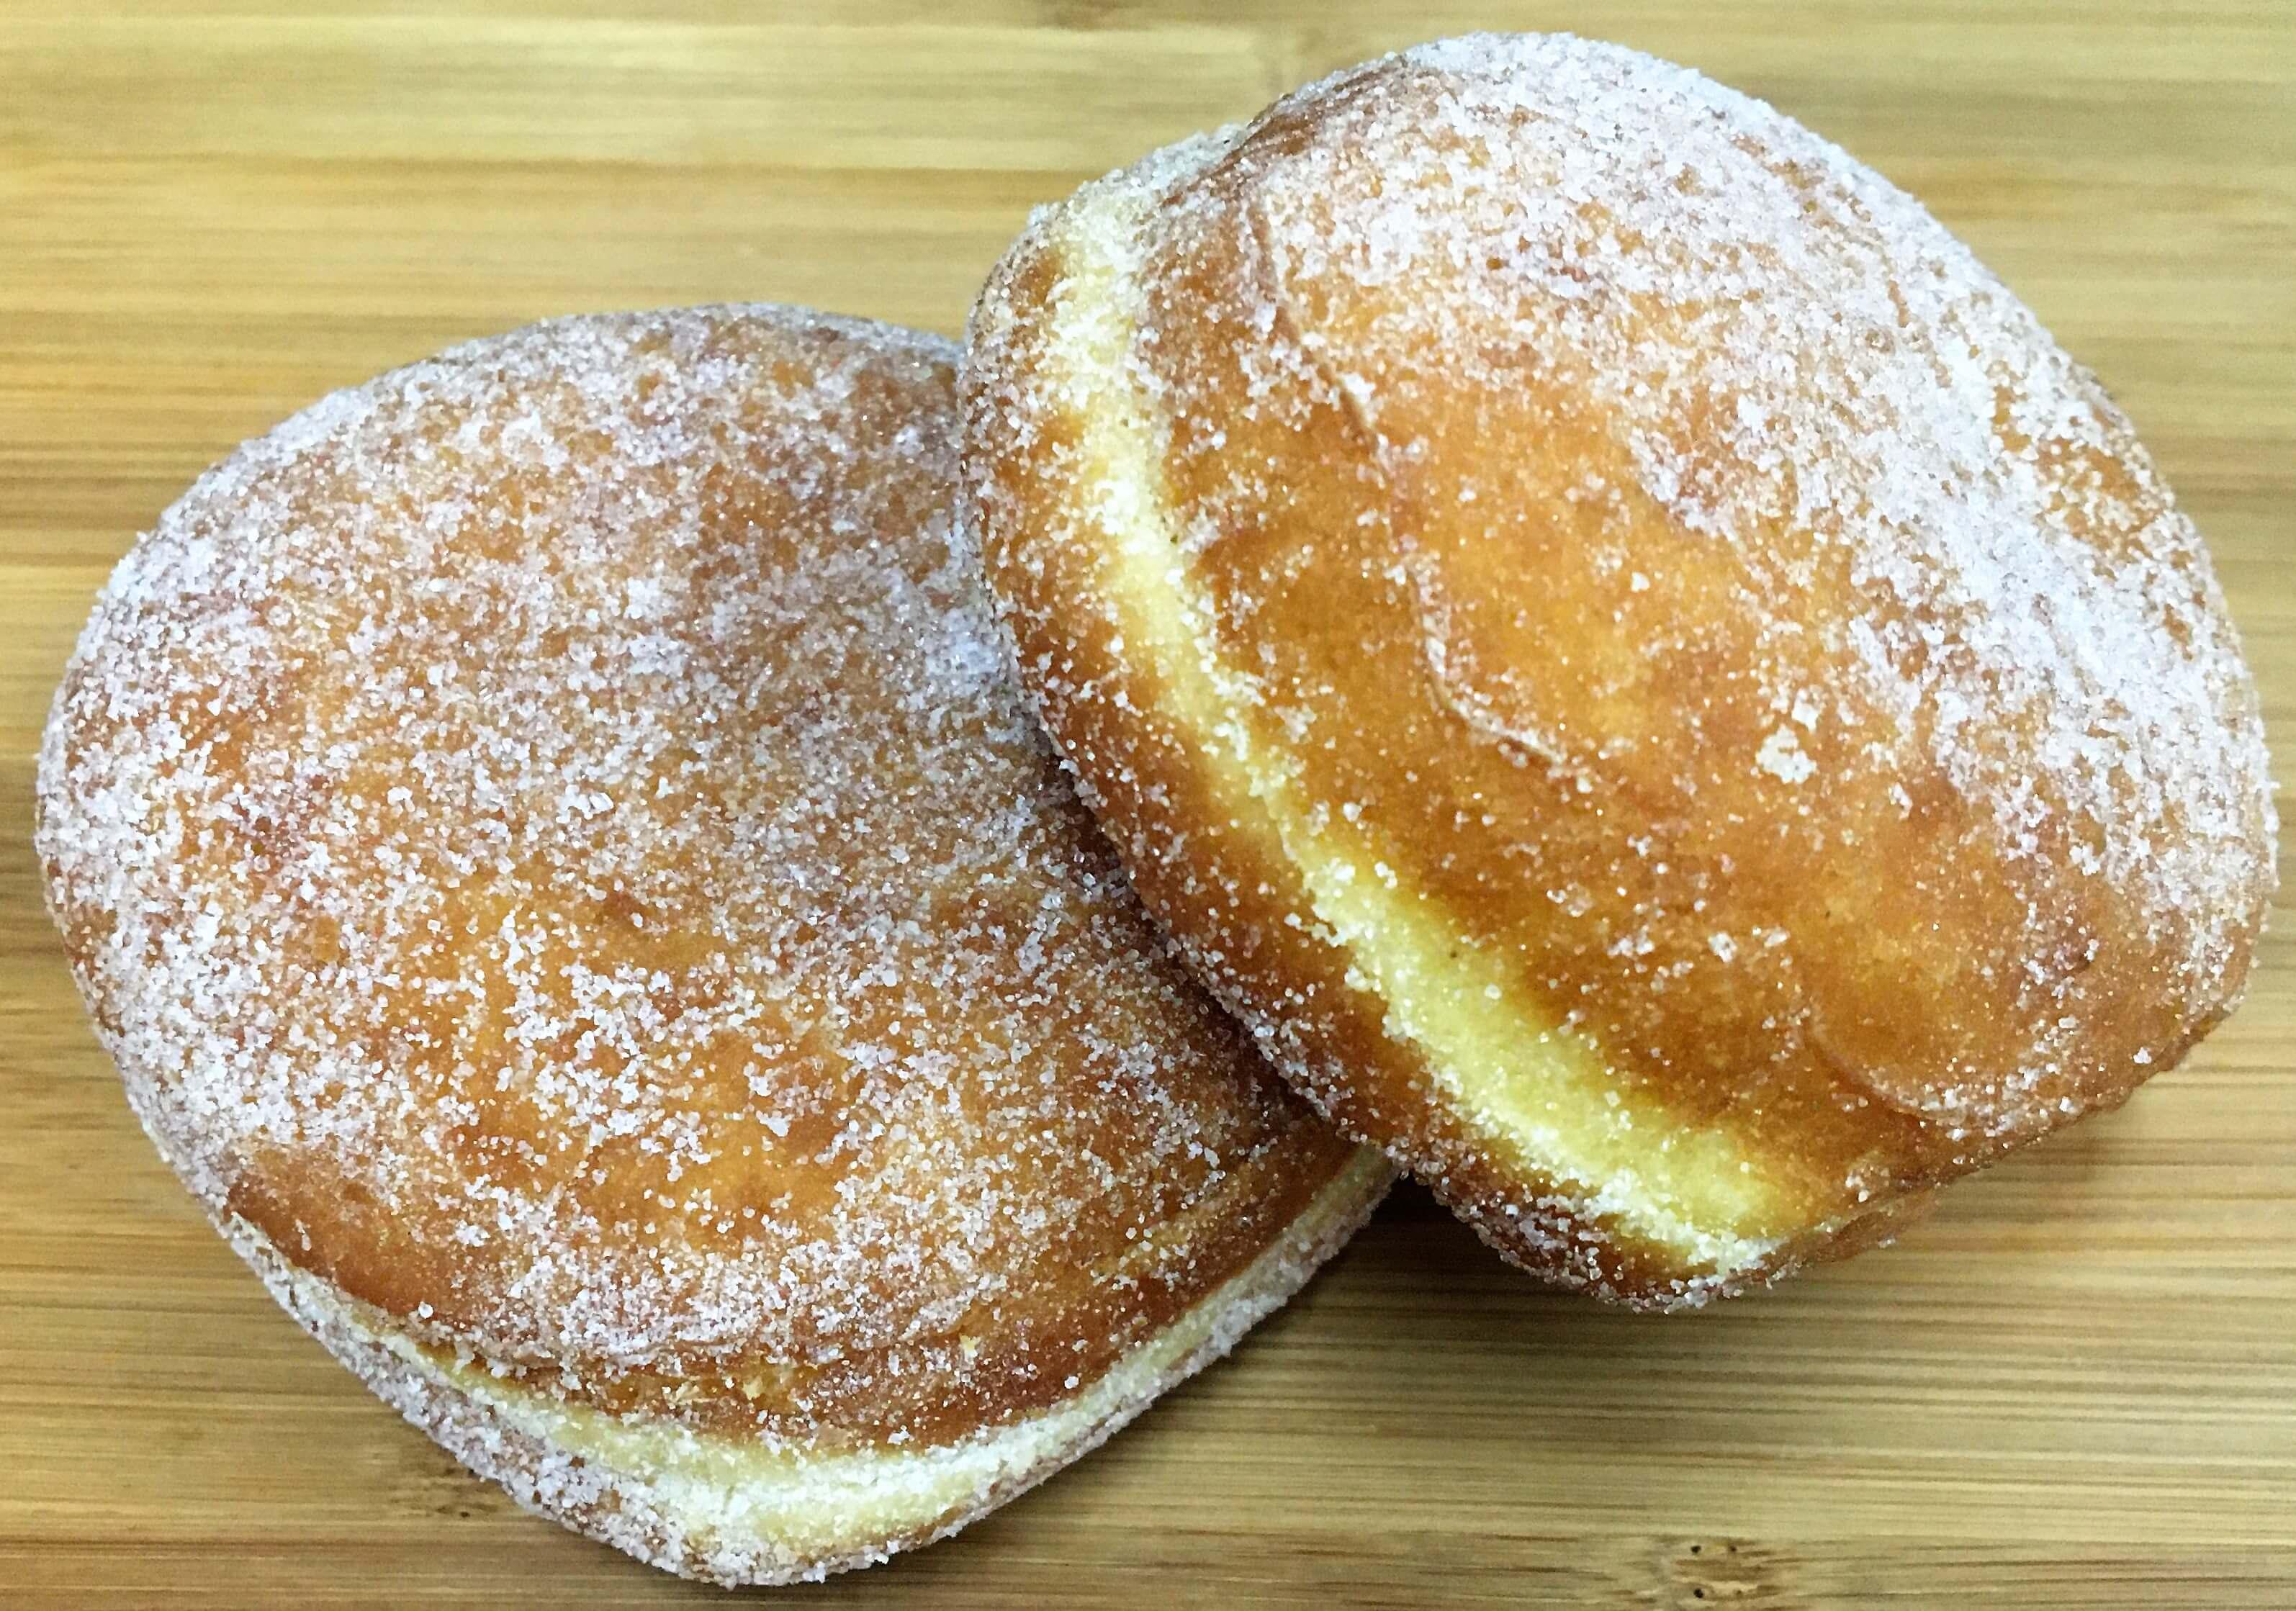 Moroleon Bakery - Cream Donuts $0.89 per unit.